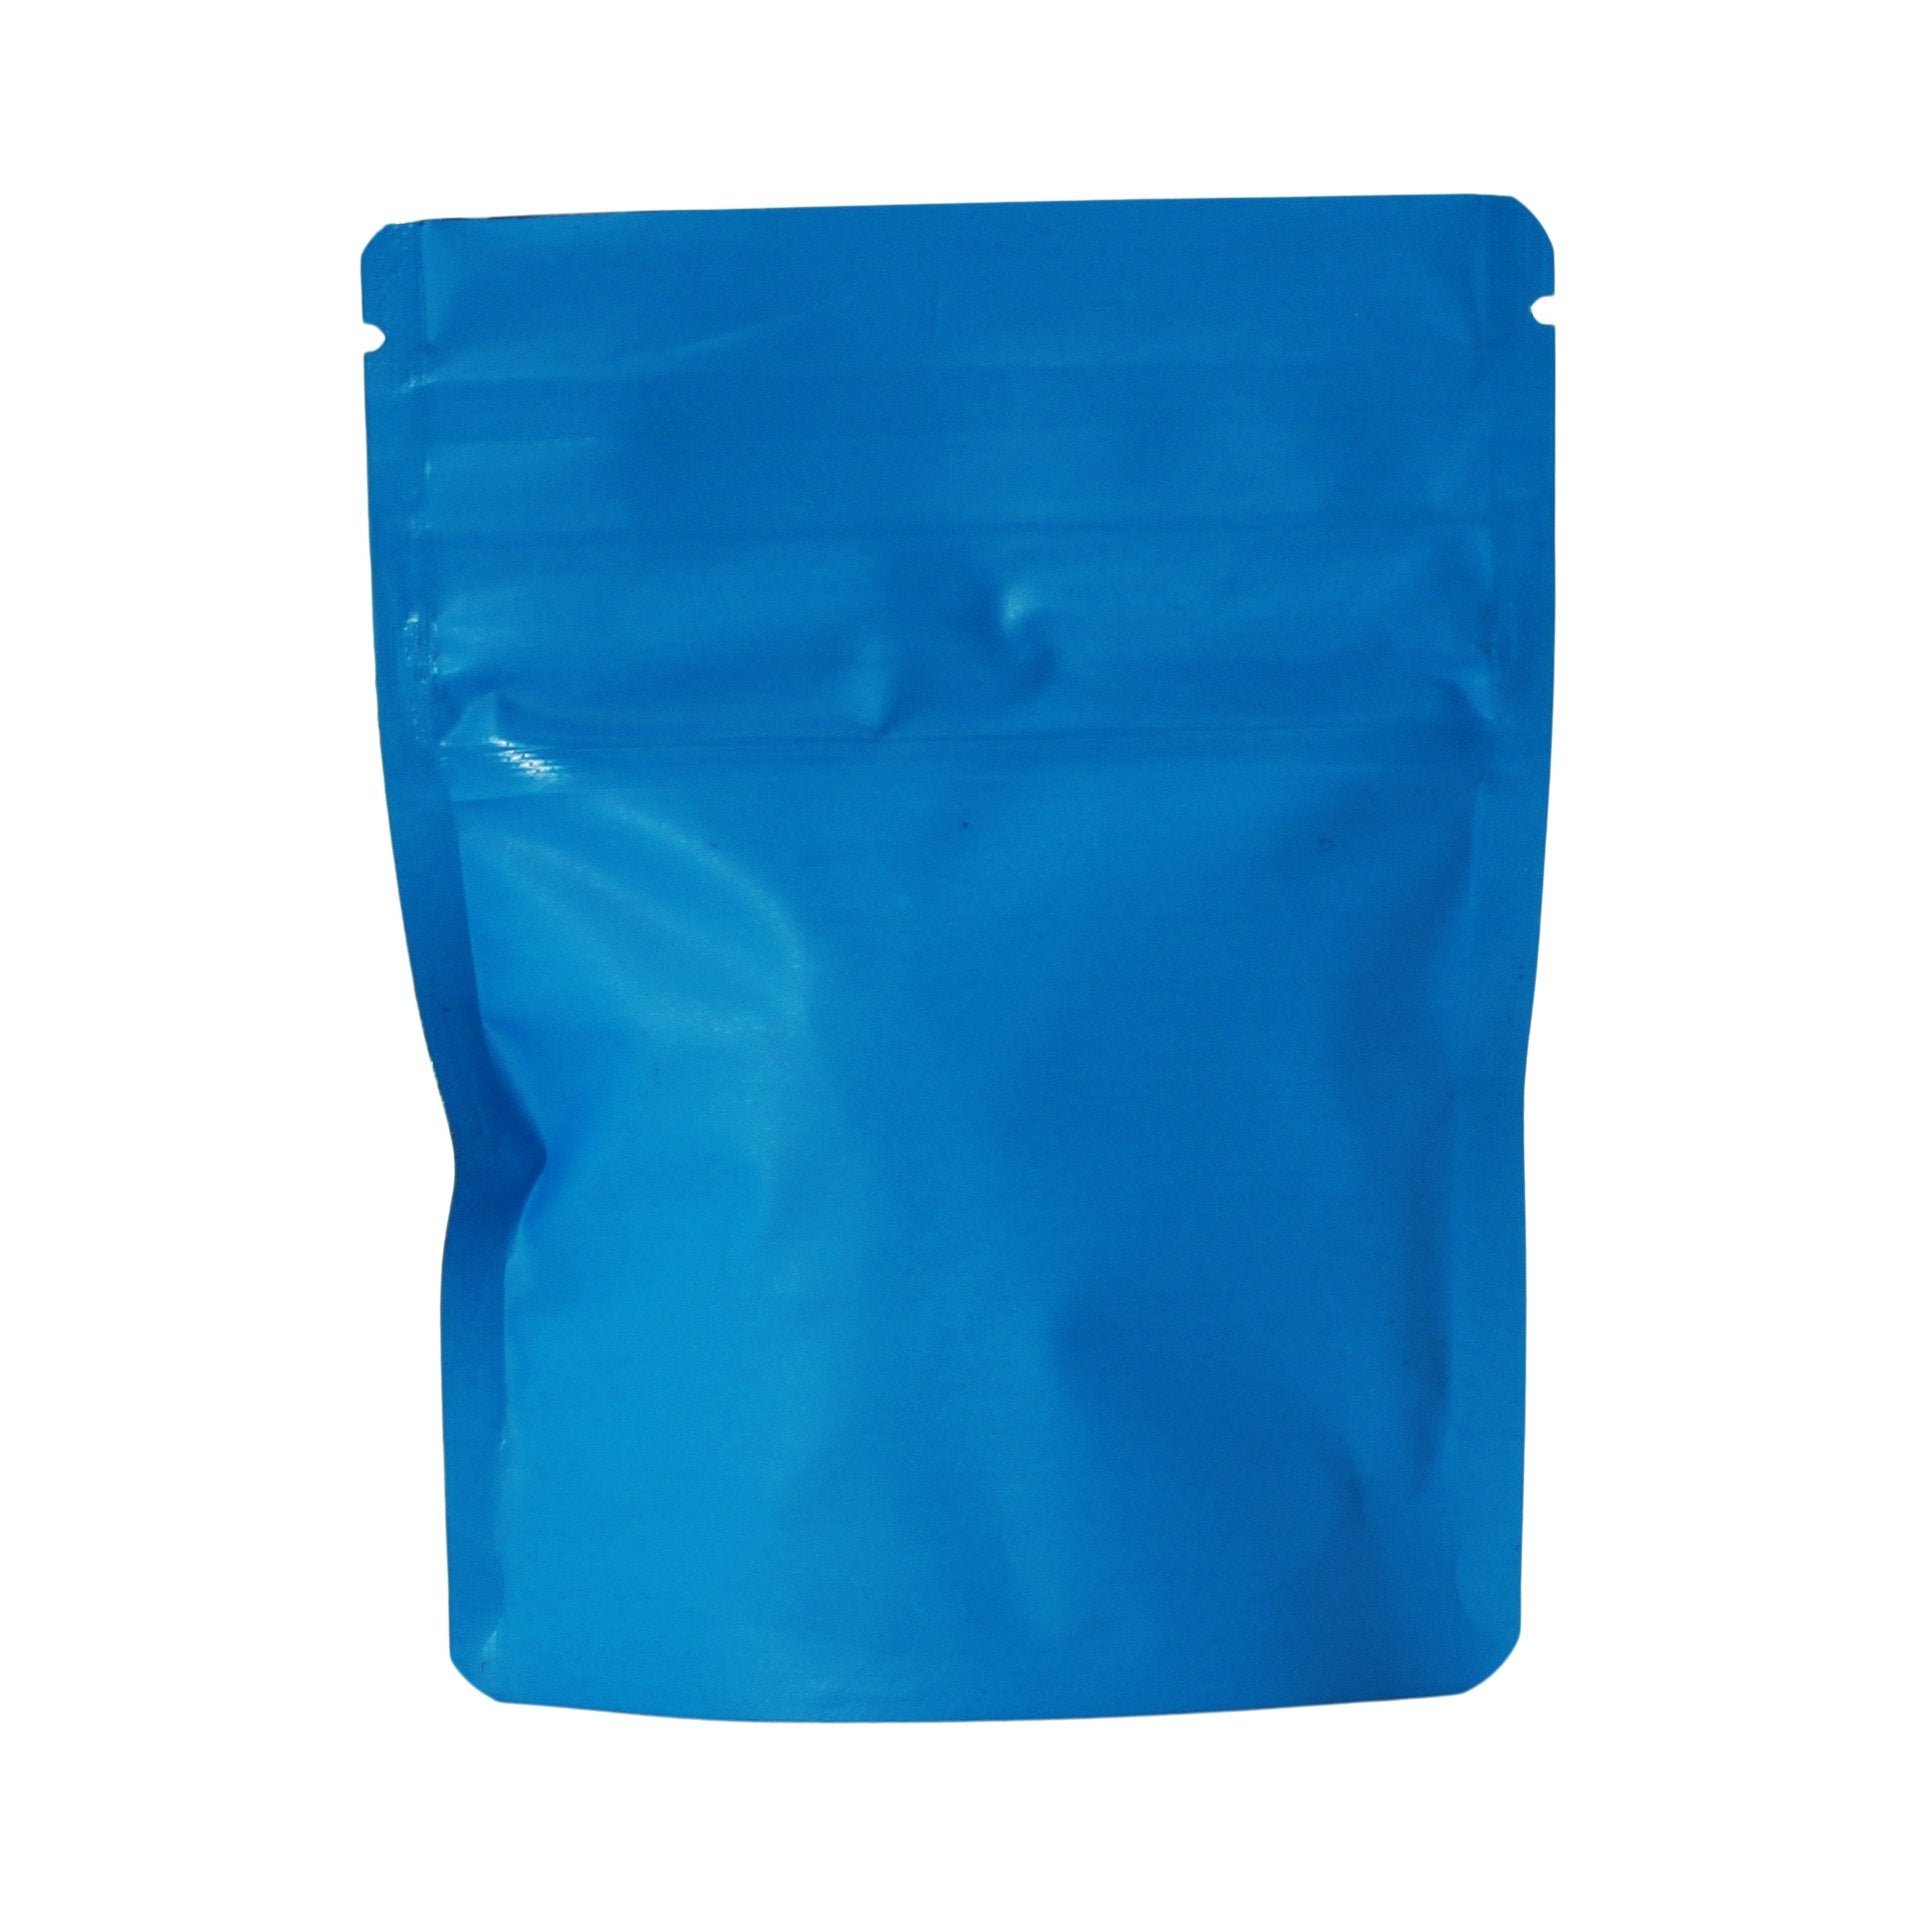 Bag King Child-Resistant Opaque Bag (1 gram) 3.5” x 4.5”